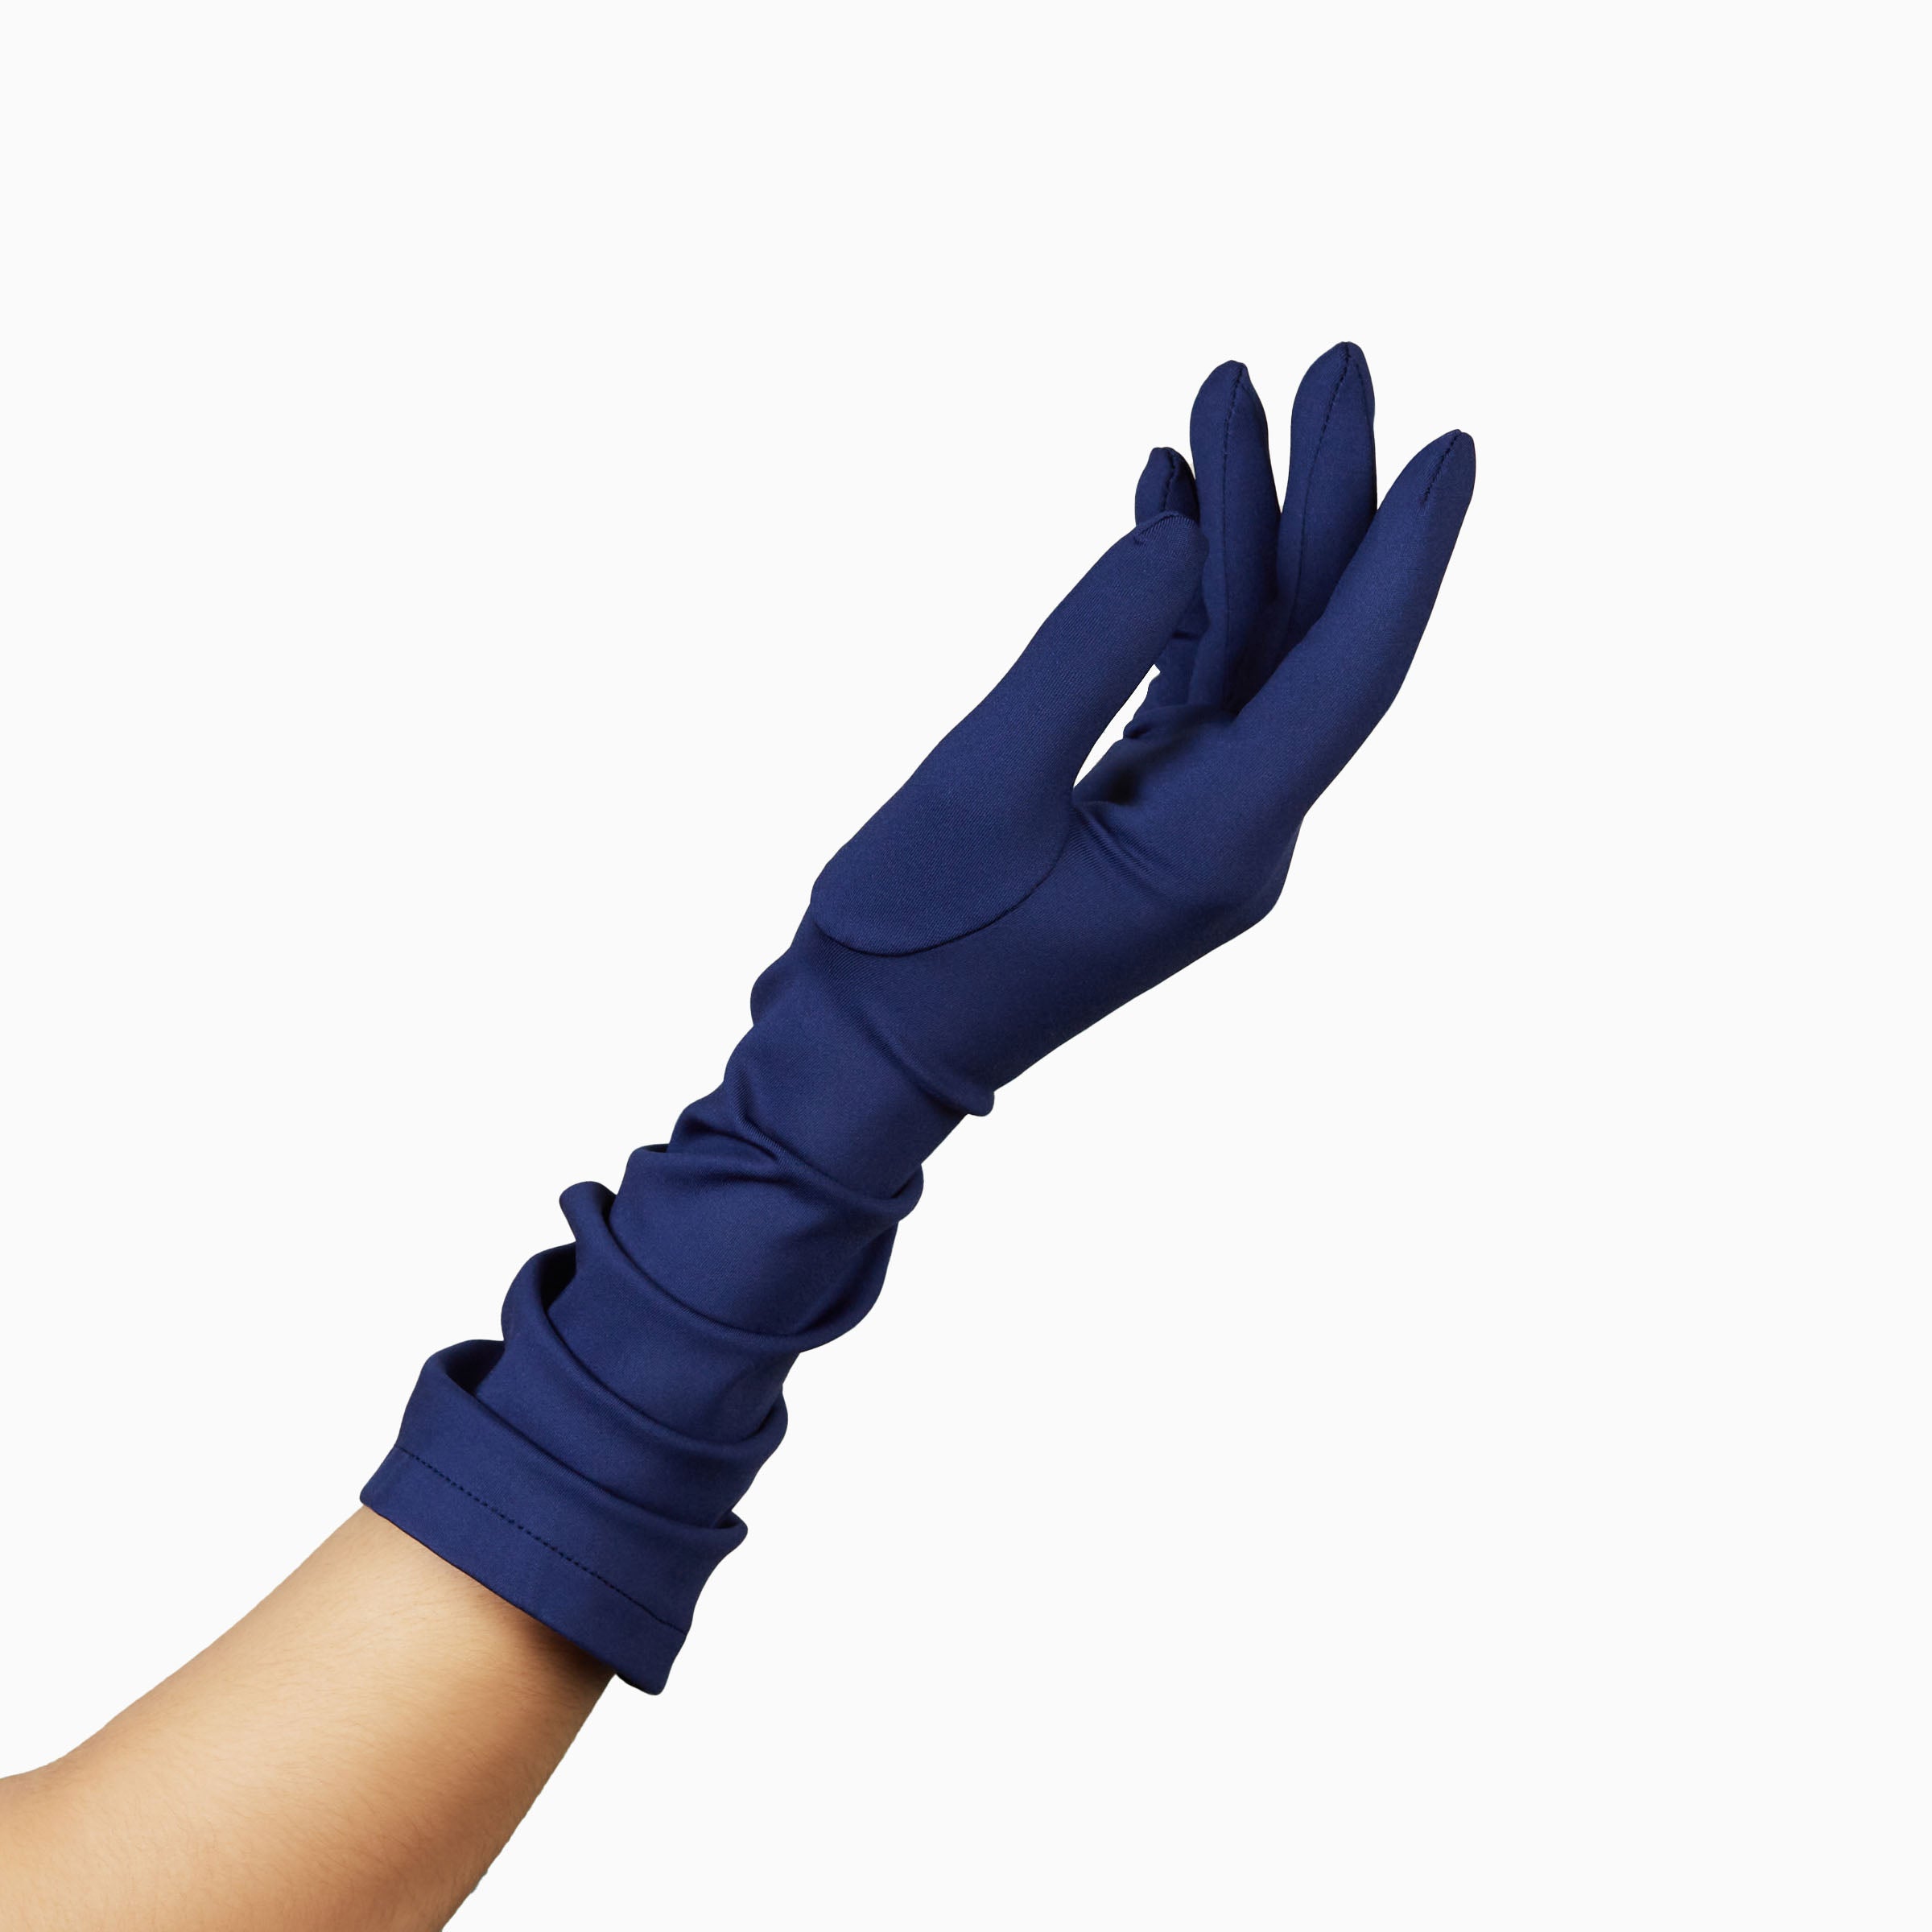 THE JILL formal women's glove in Parisian Blue.